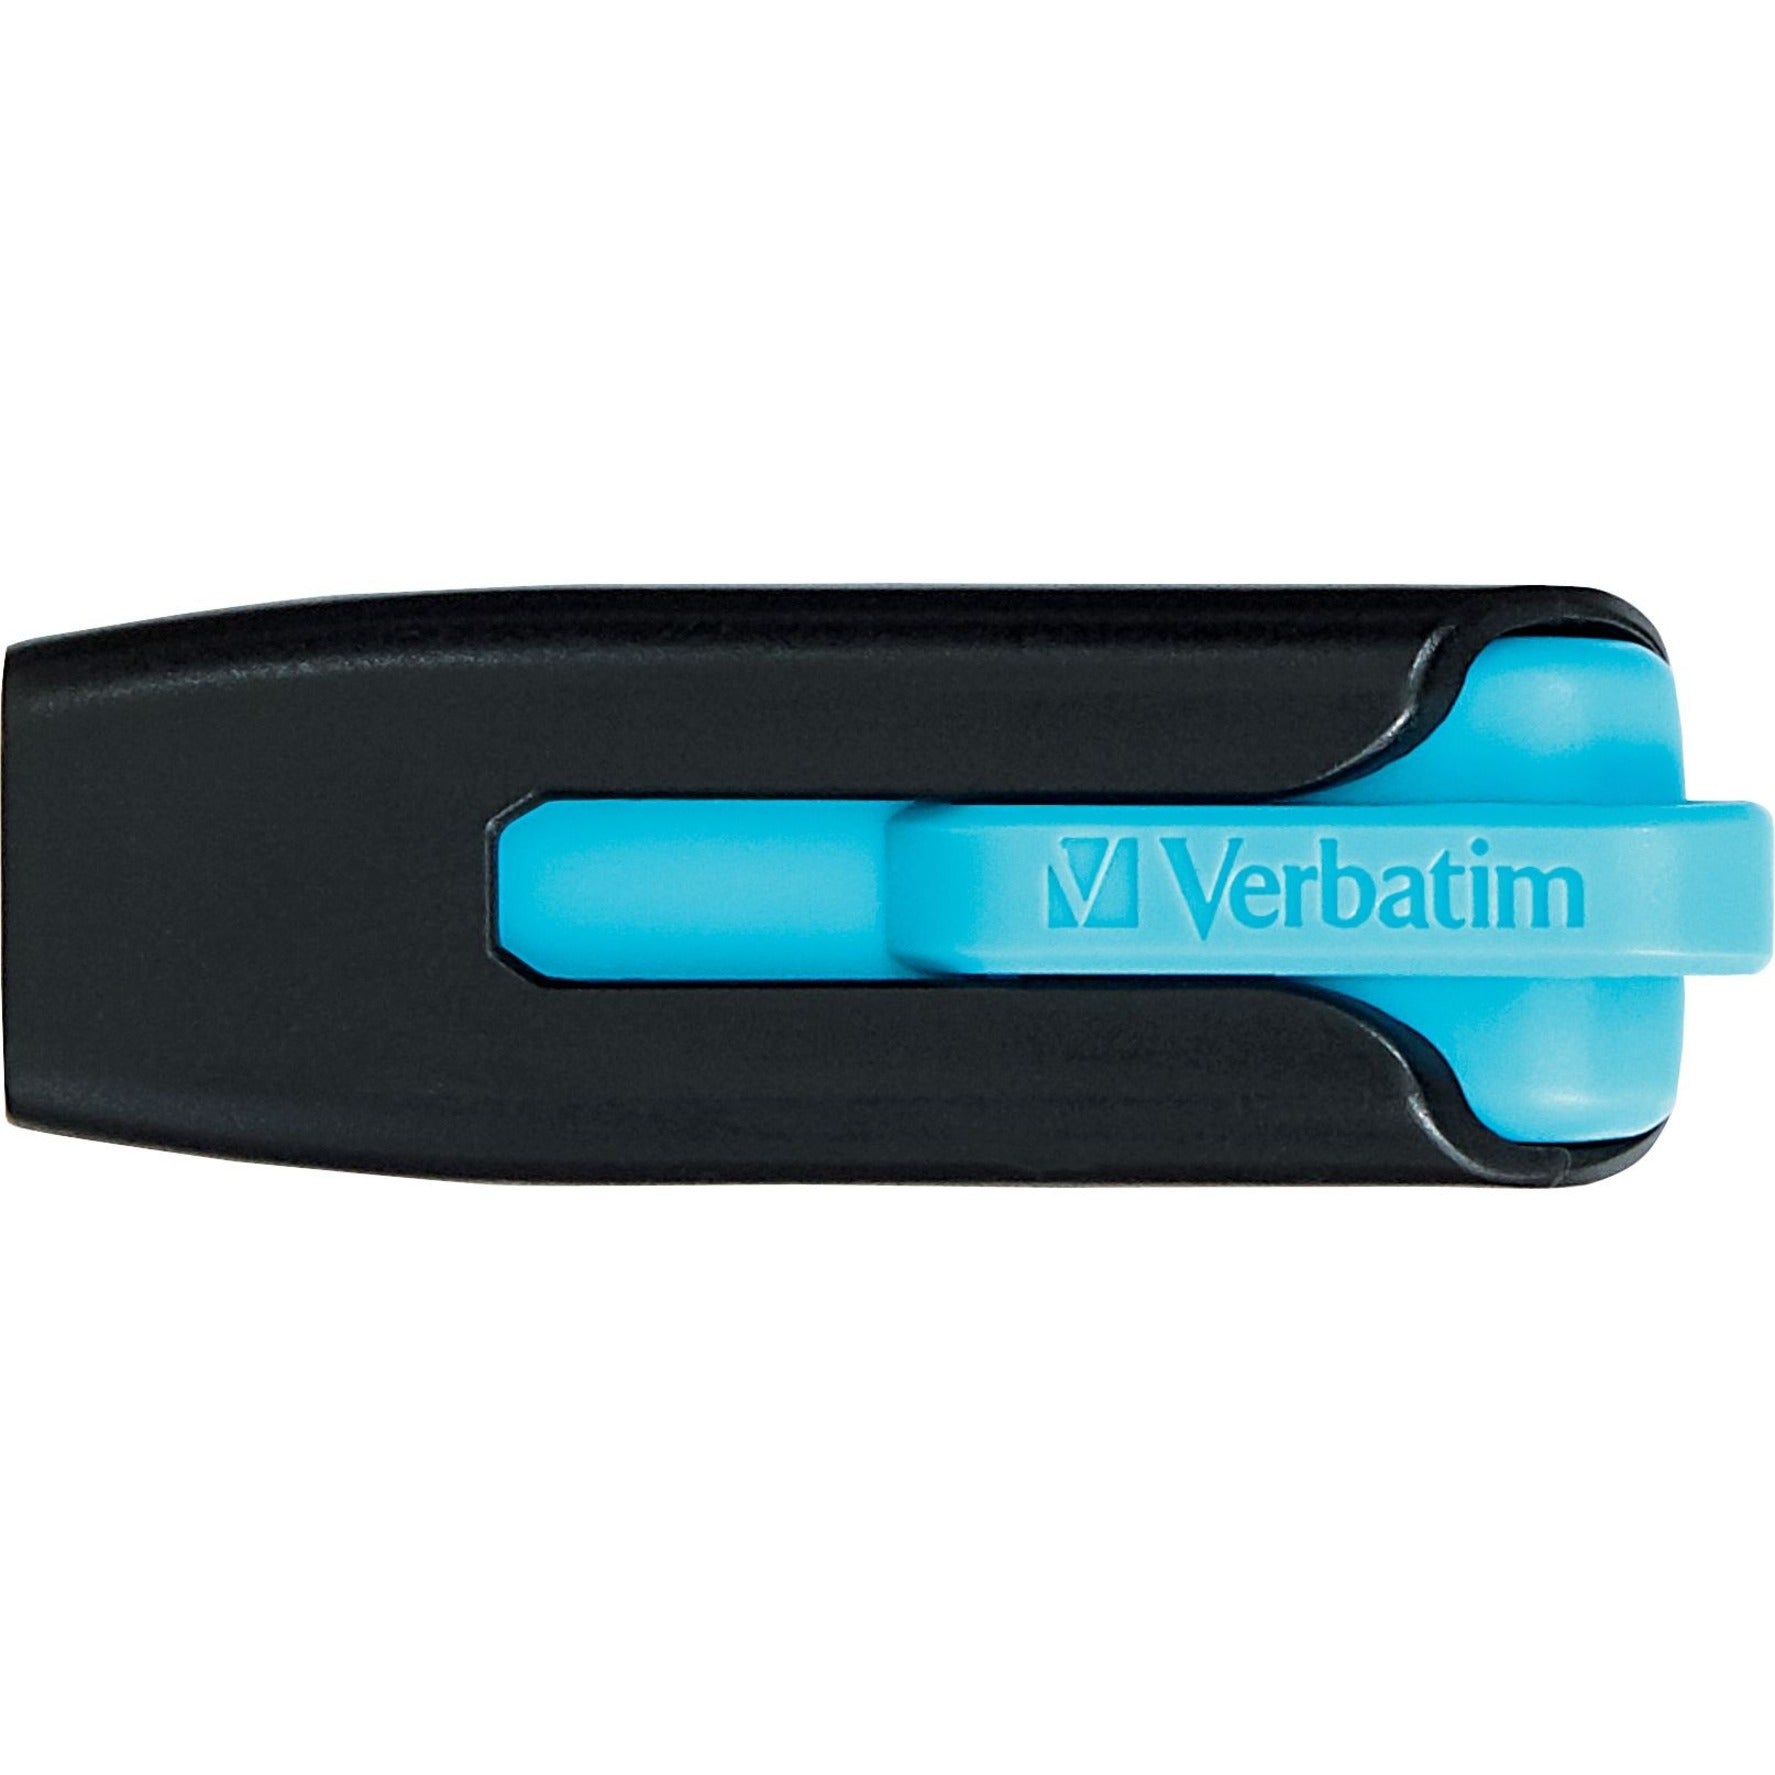 Microban 49176 Store 'n' Go V3 USB Drive 16GB Blue 领先品牌：迈克班 (Microban) 产品型号：49176 Store 'n' Go V3 USB 驱动器，16GB，蓝色